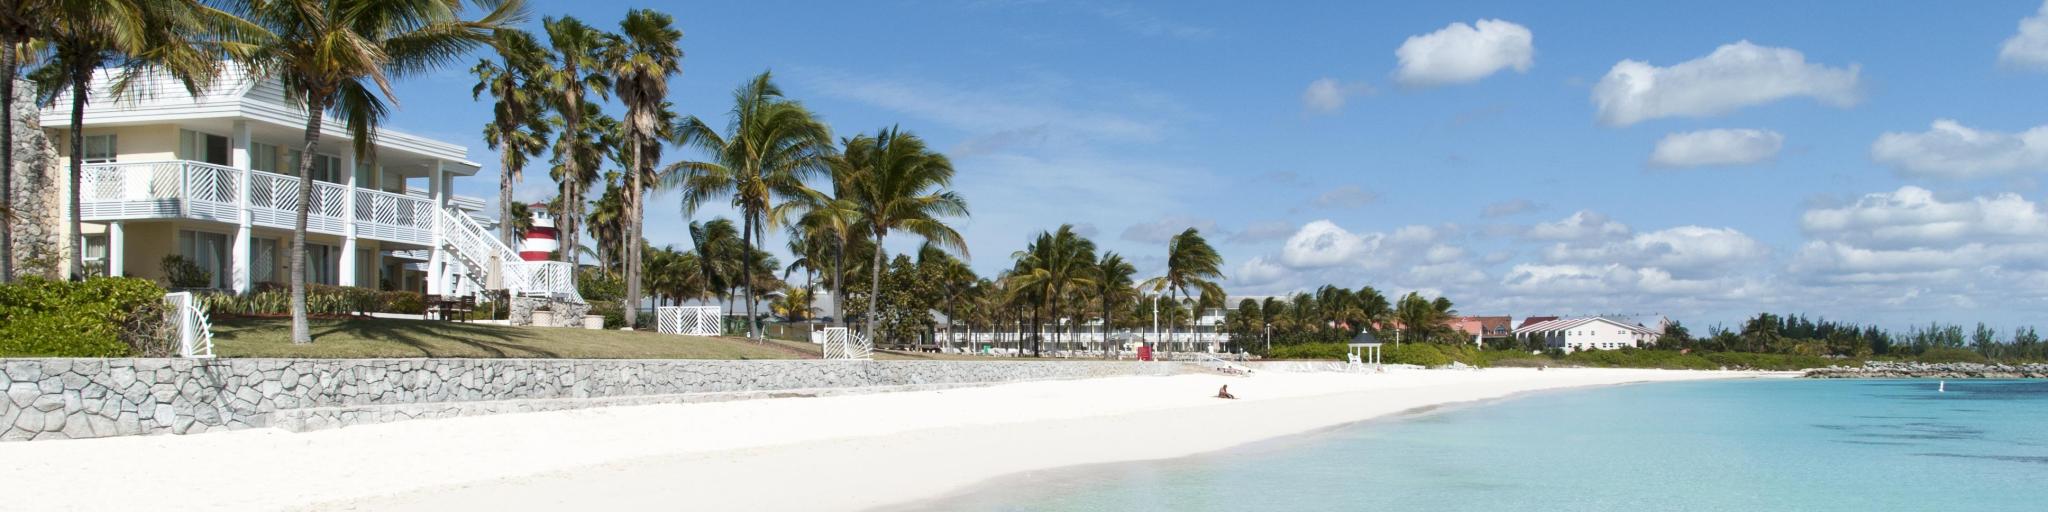 The empty Lucaya Beach in Freeport town on Grand Bahama island.